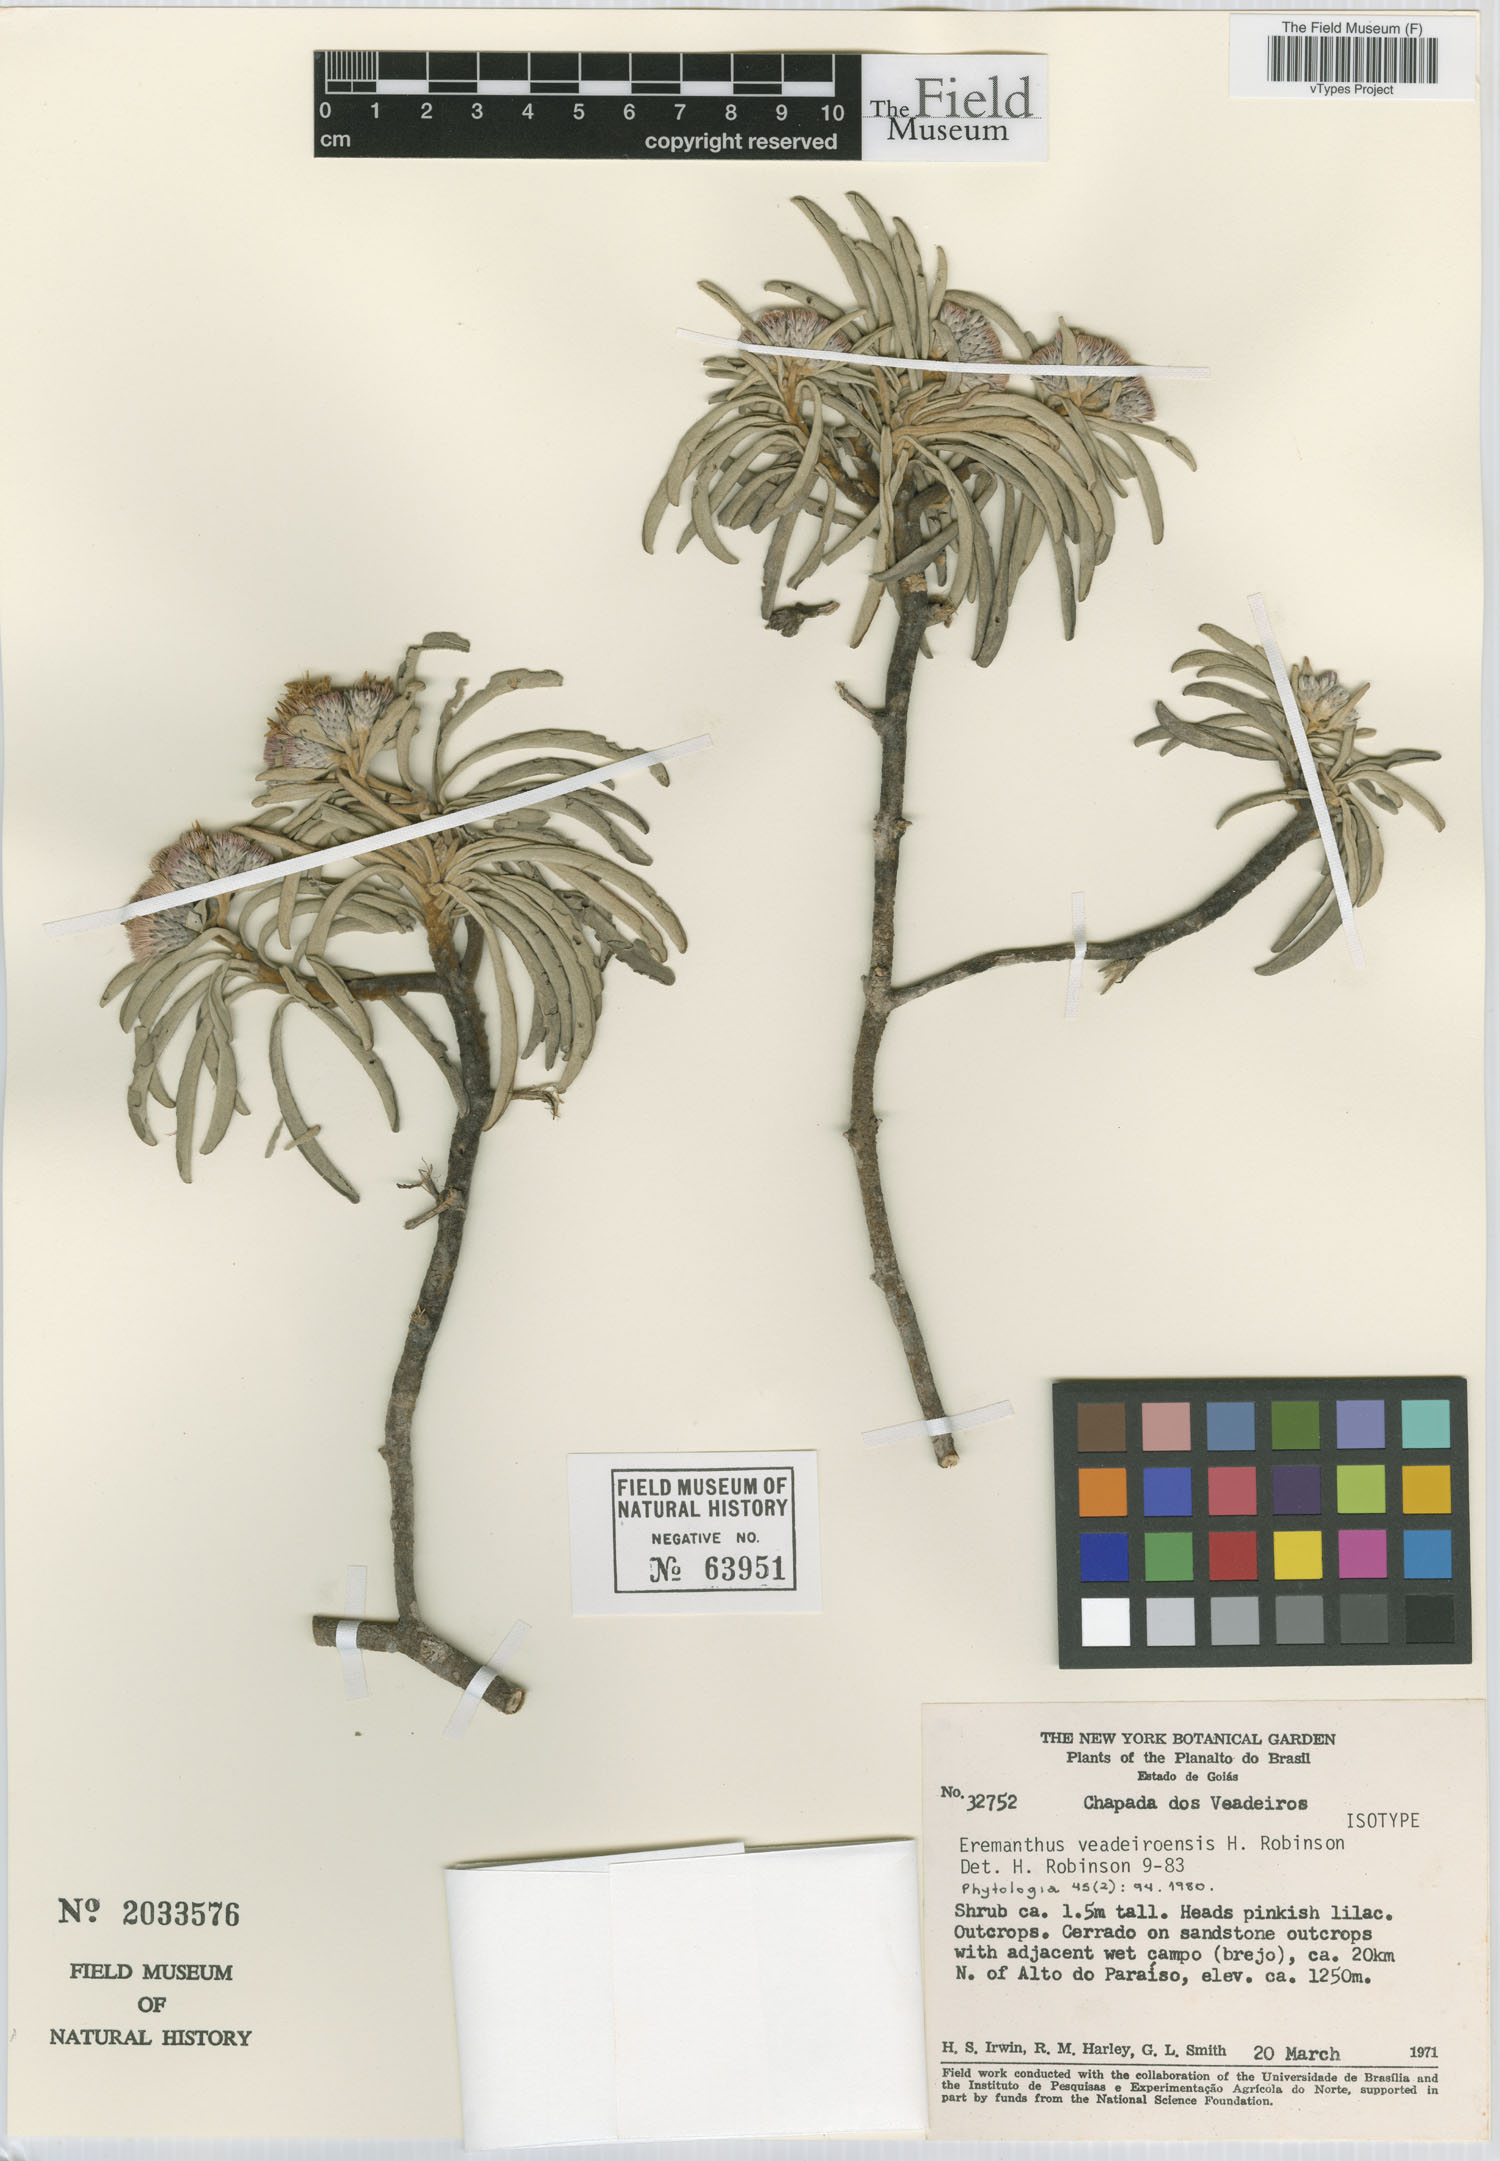 Eremanthus veadeiroensis image